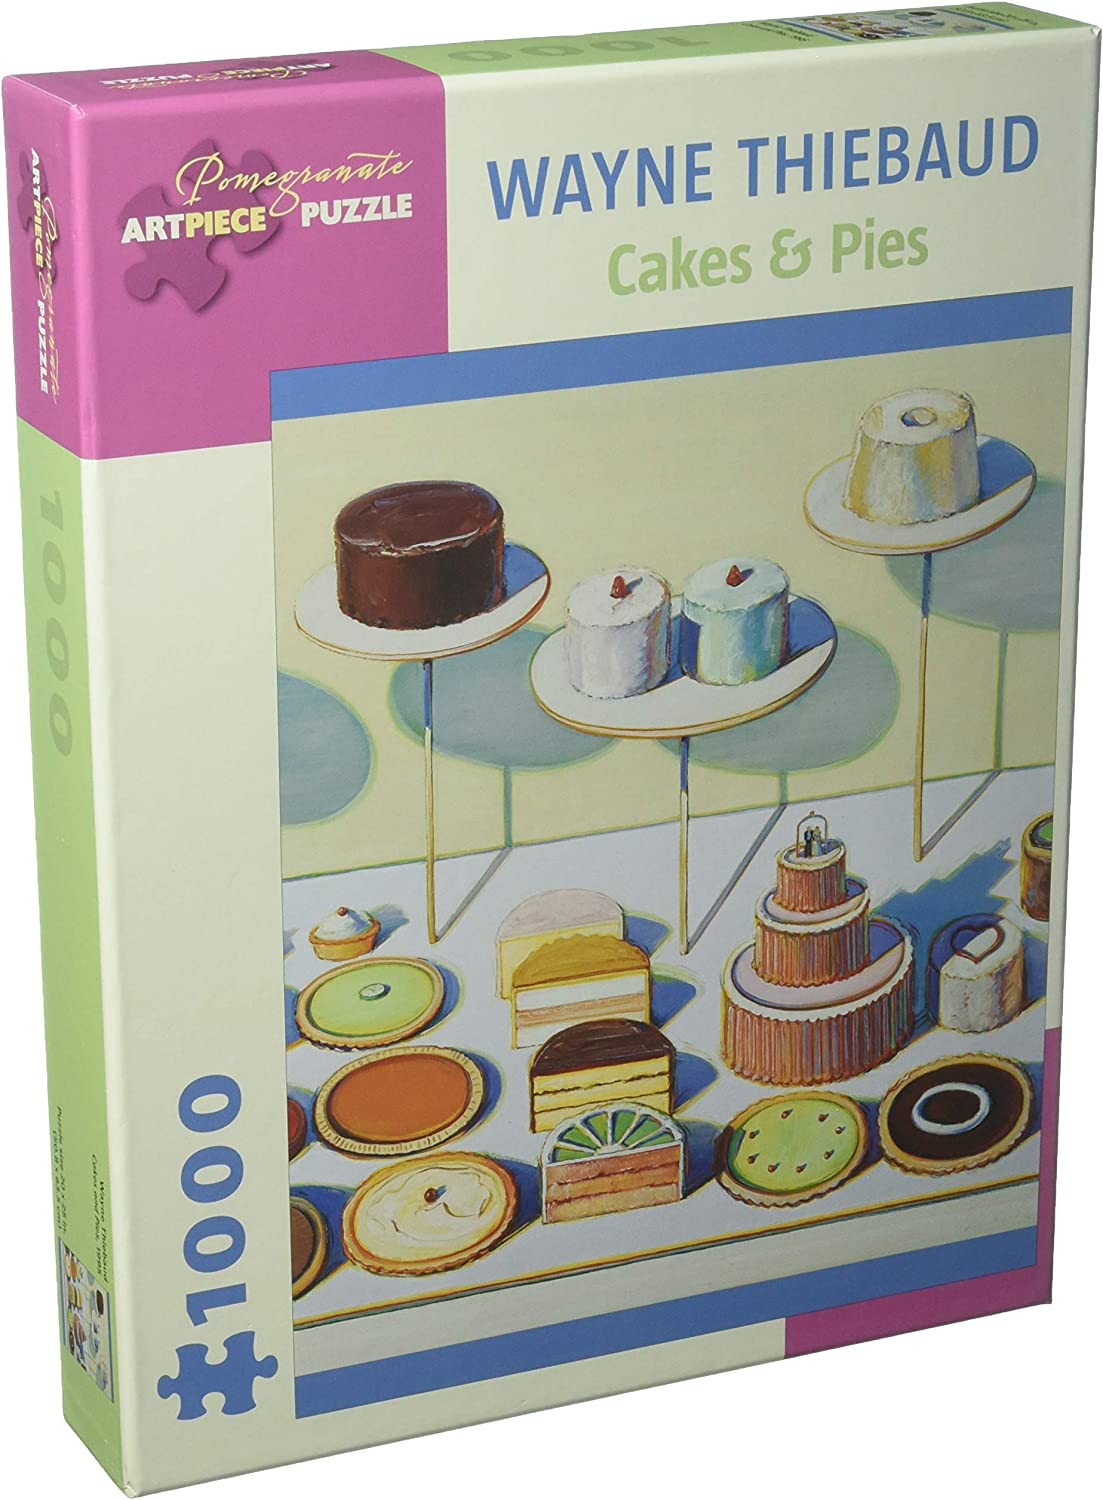 Puzzle: Wayne Thiebaud - Cakes & Pies 1000 Pieces